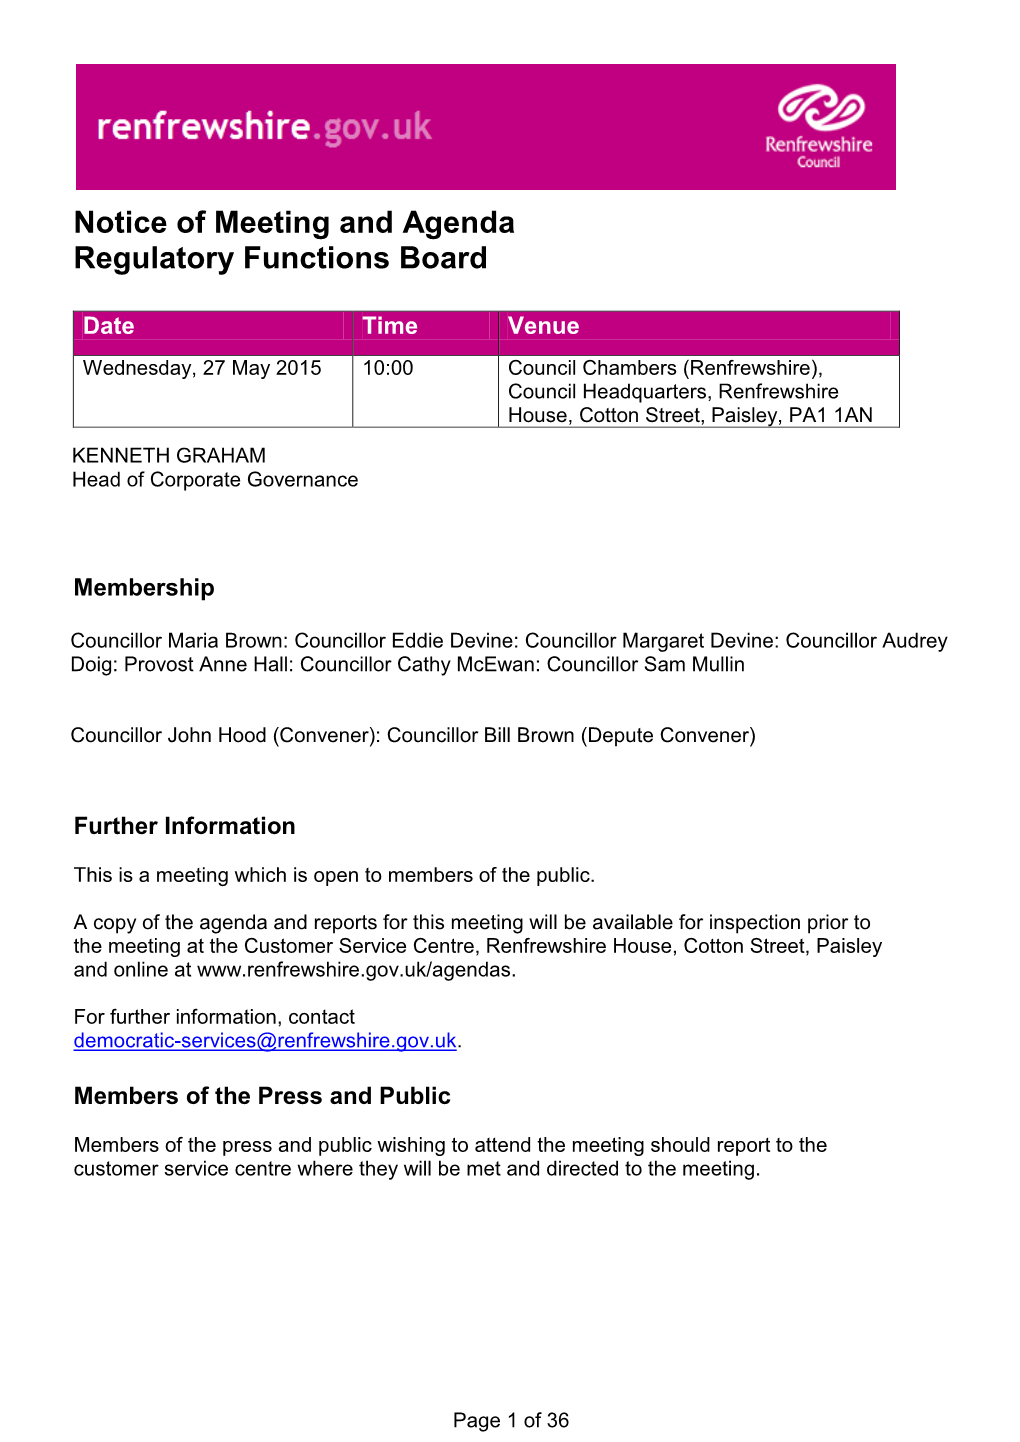 Notice of Meeting and Agenda Regulatory Functions Board